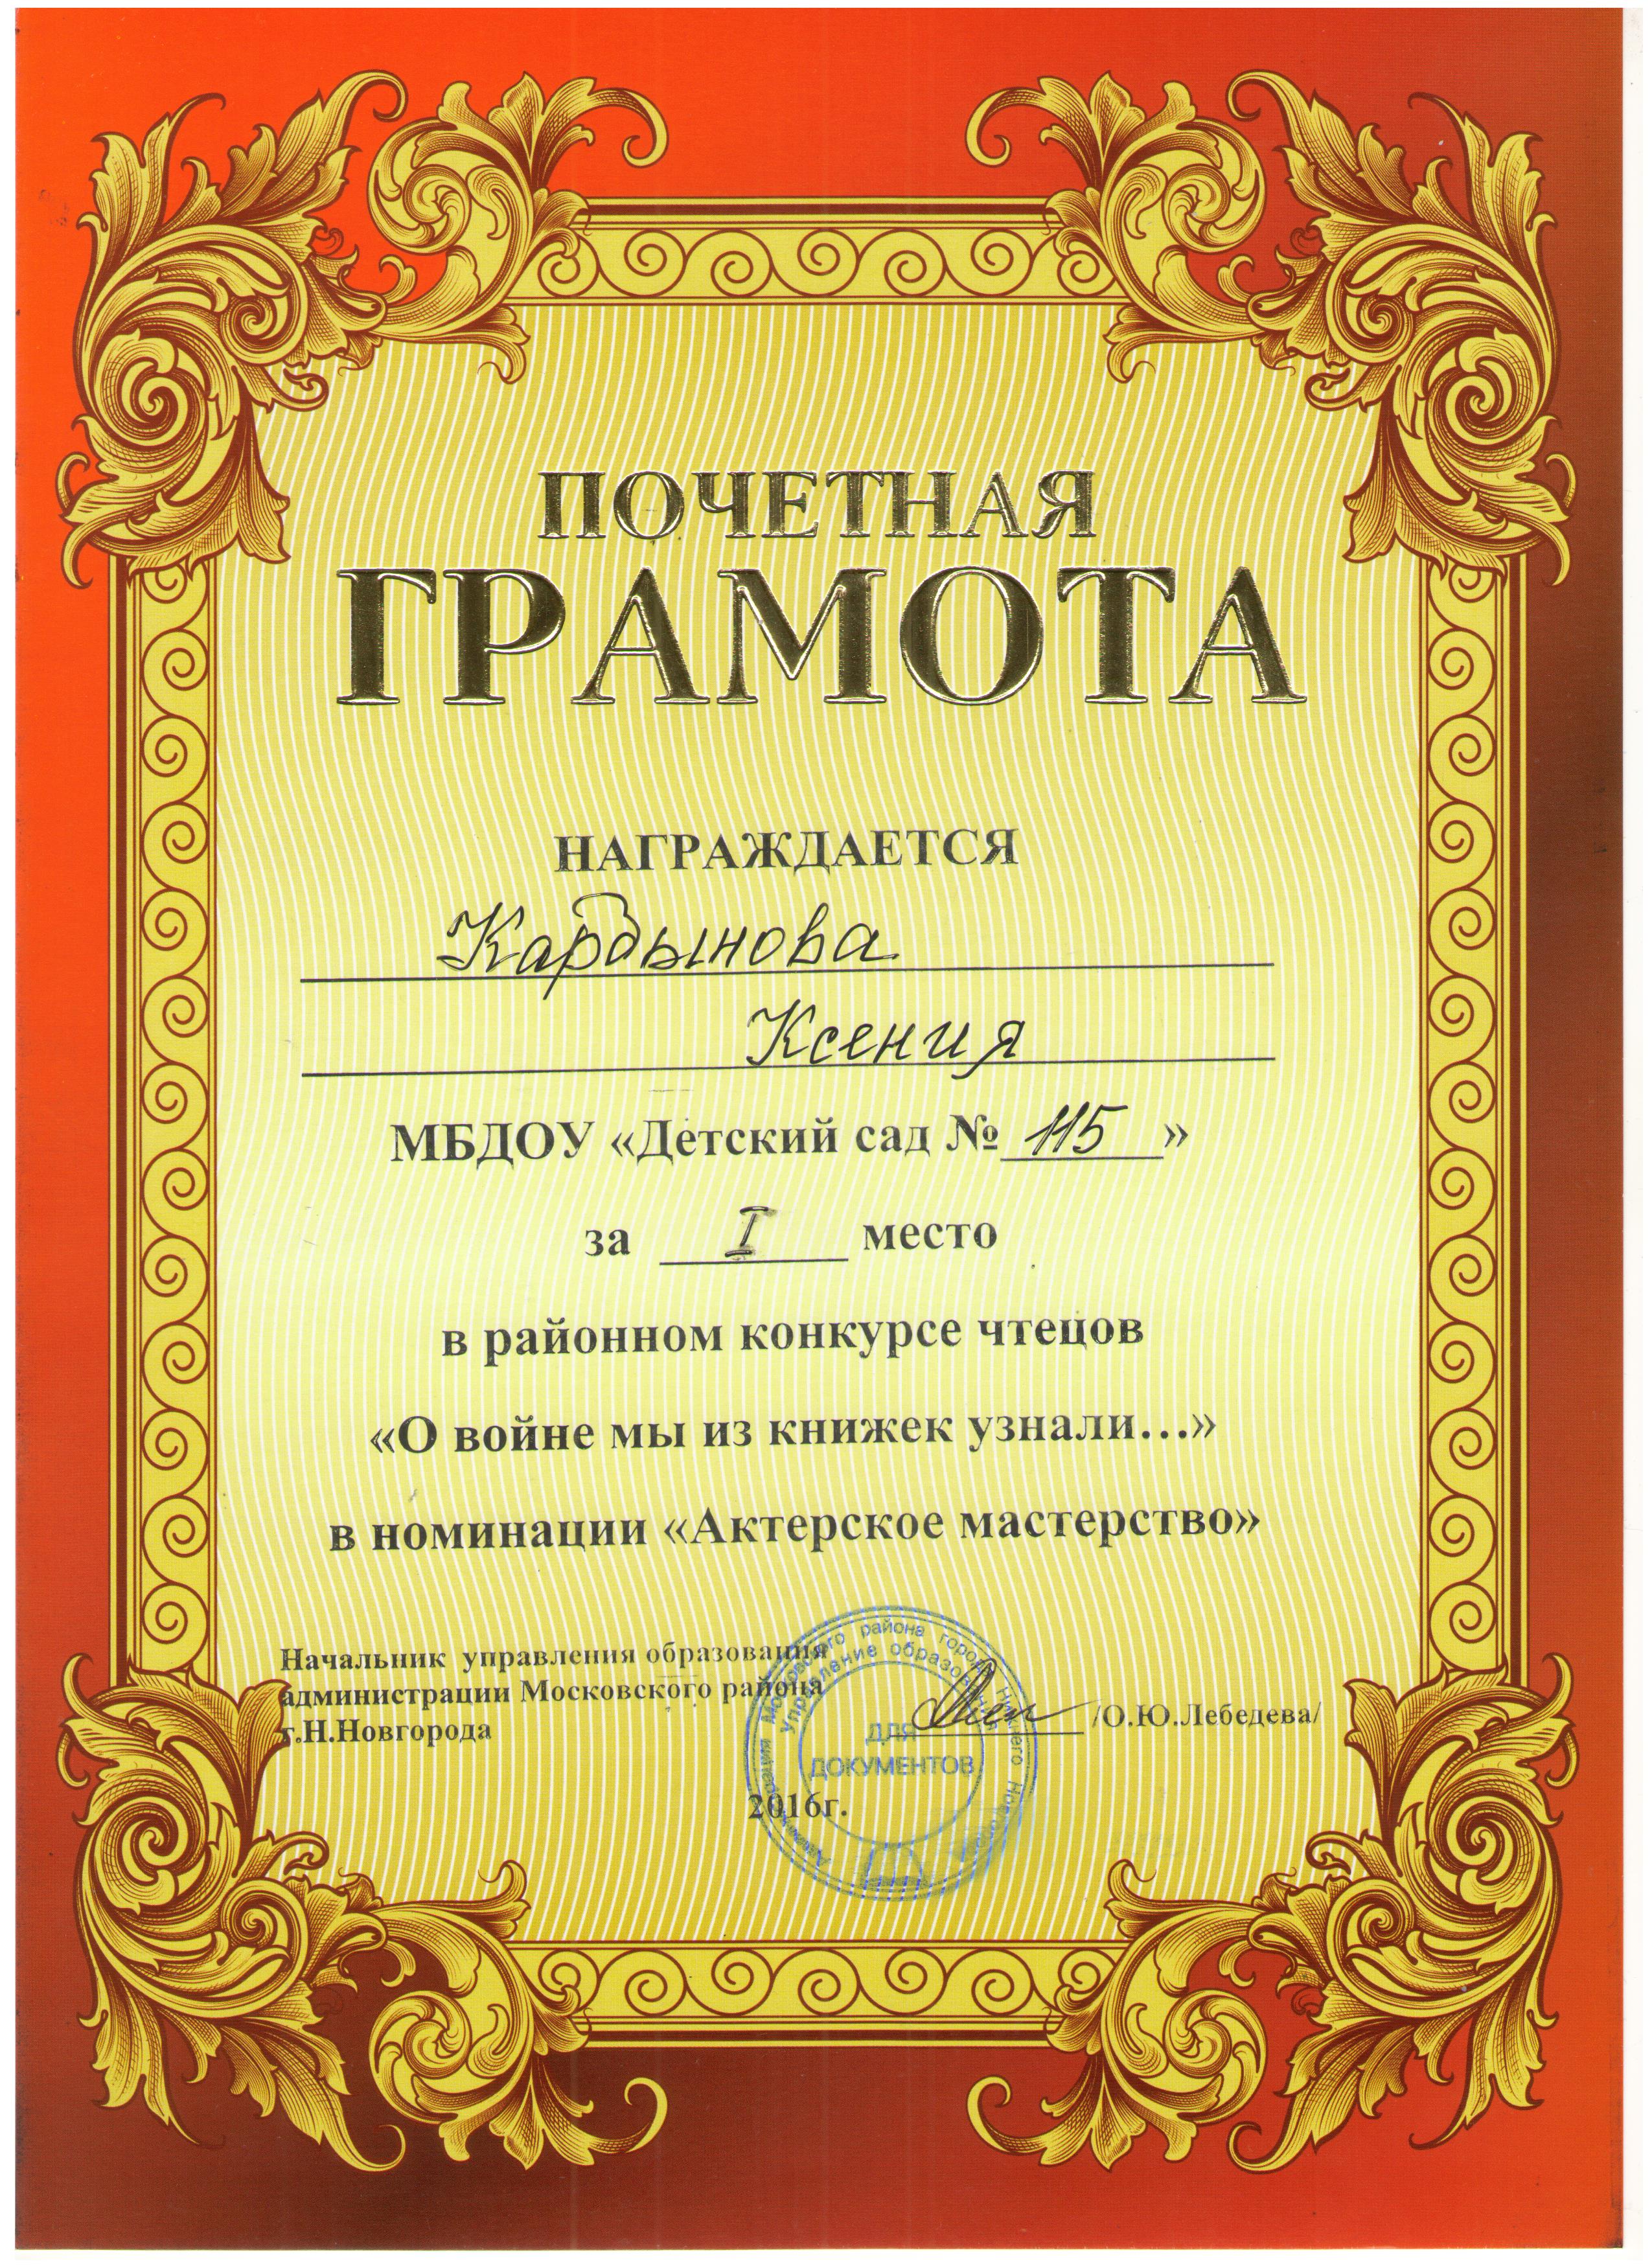 грамота Кардынова Ксения 1 место район конкурс Чтецов 05.05.16 001